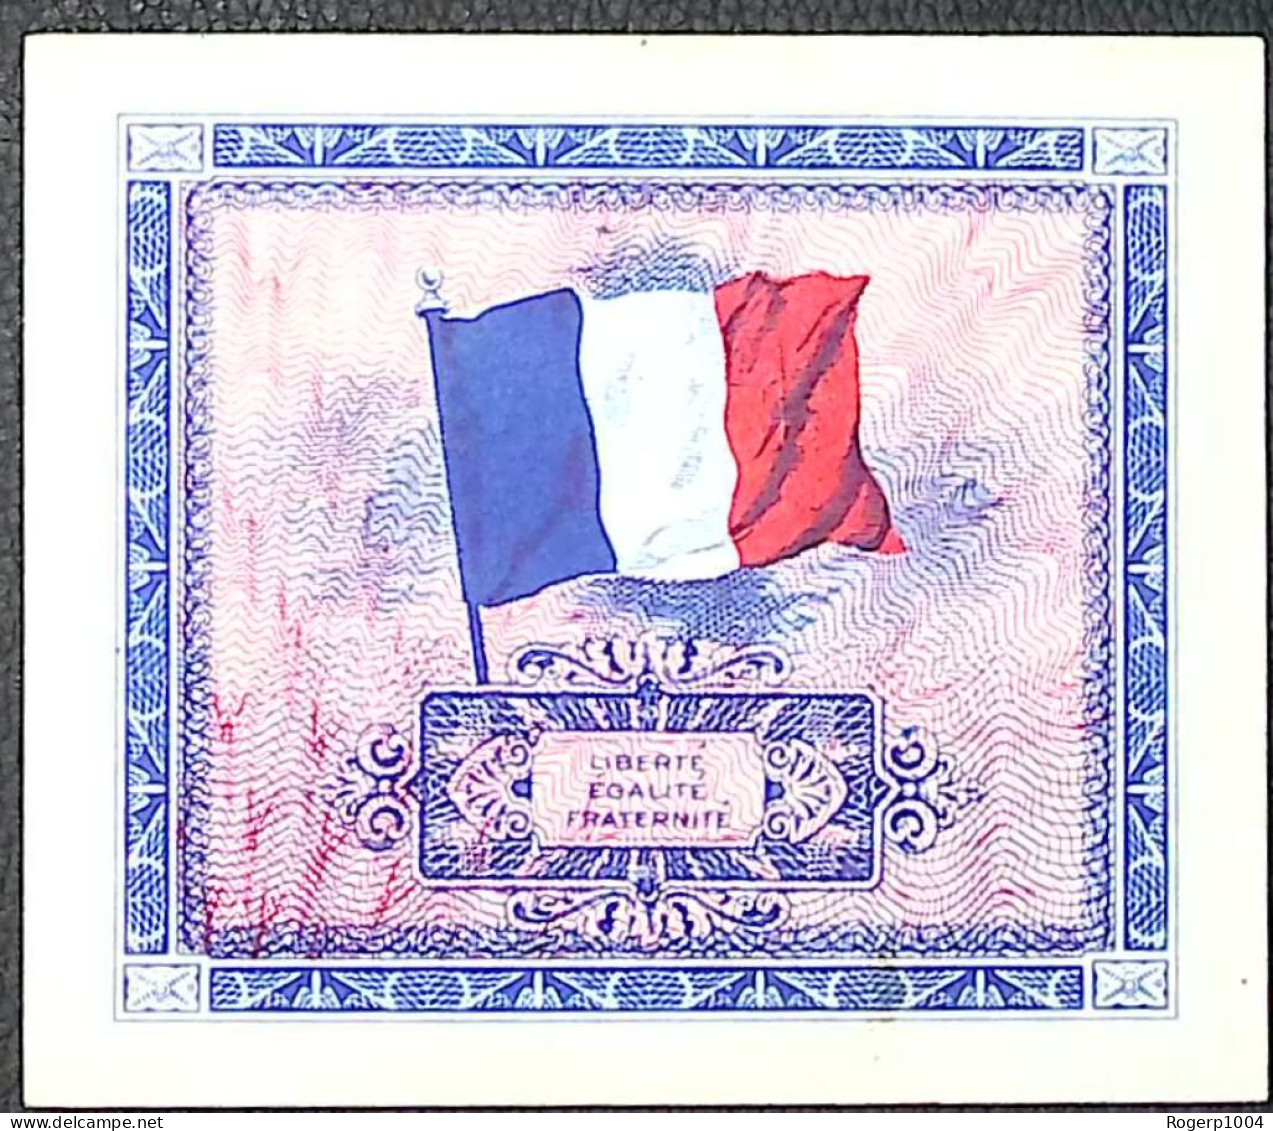 FRANCE * Billets Du Trésor * 5 Francs Drapeau * 1944 * Sans Série * Etat/Grade SUP+/XXF - 1944 Bandiera/Francia